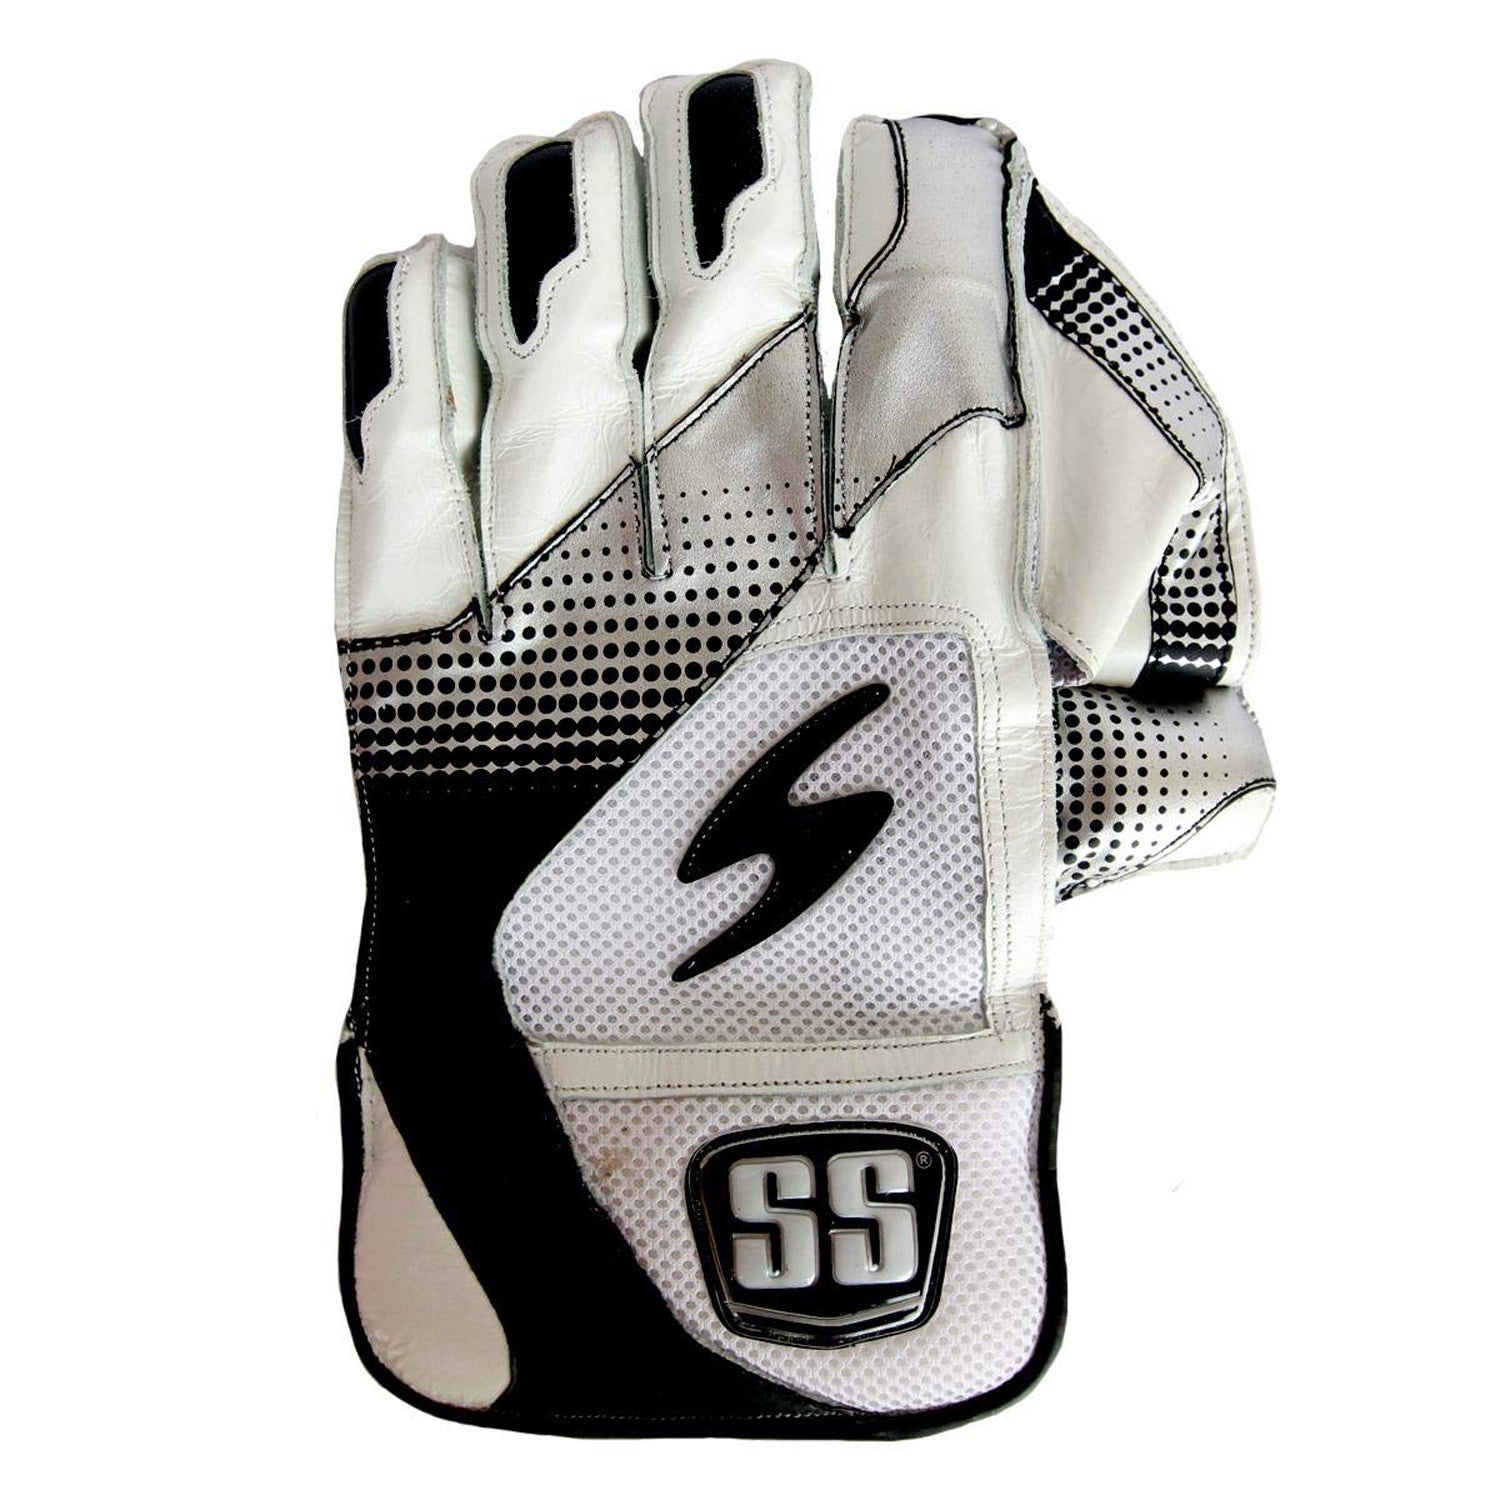 SS Platino Wicket Keeping Gloves , White/Black - Best Price online Prokicksports.com